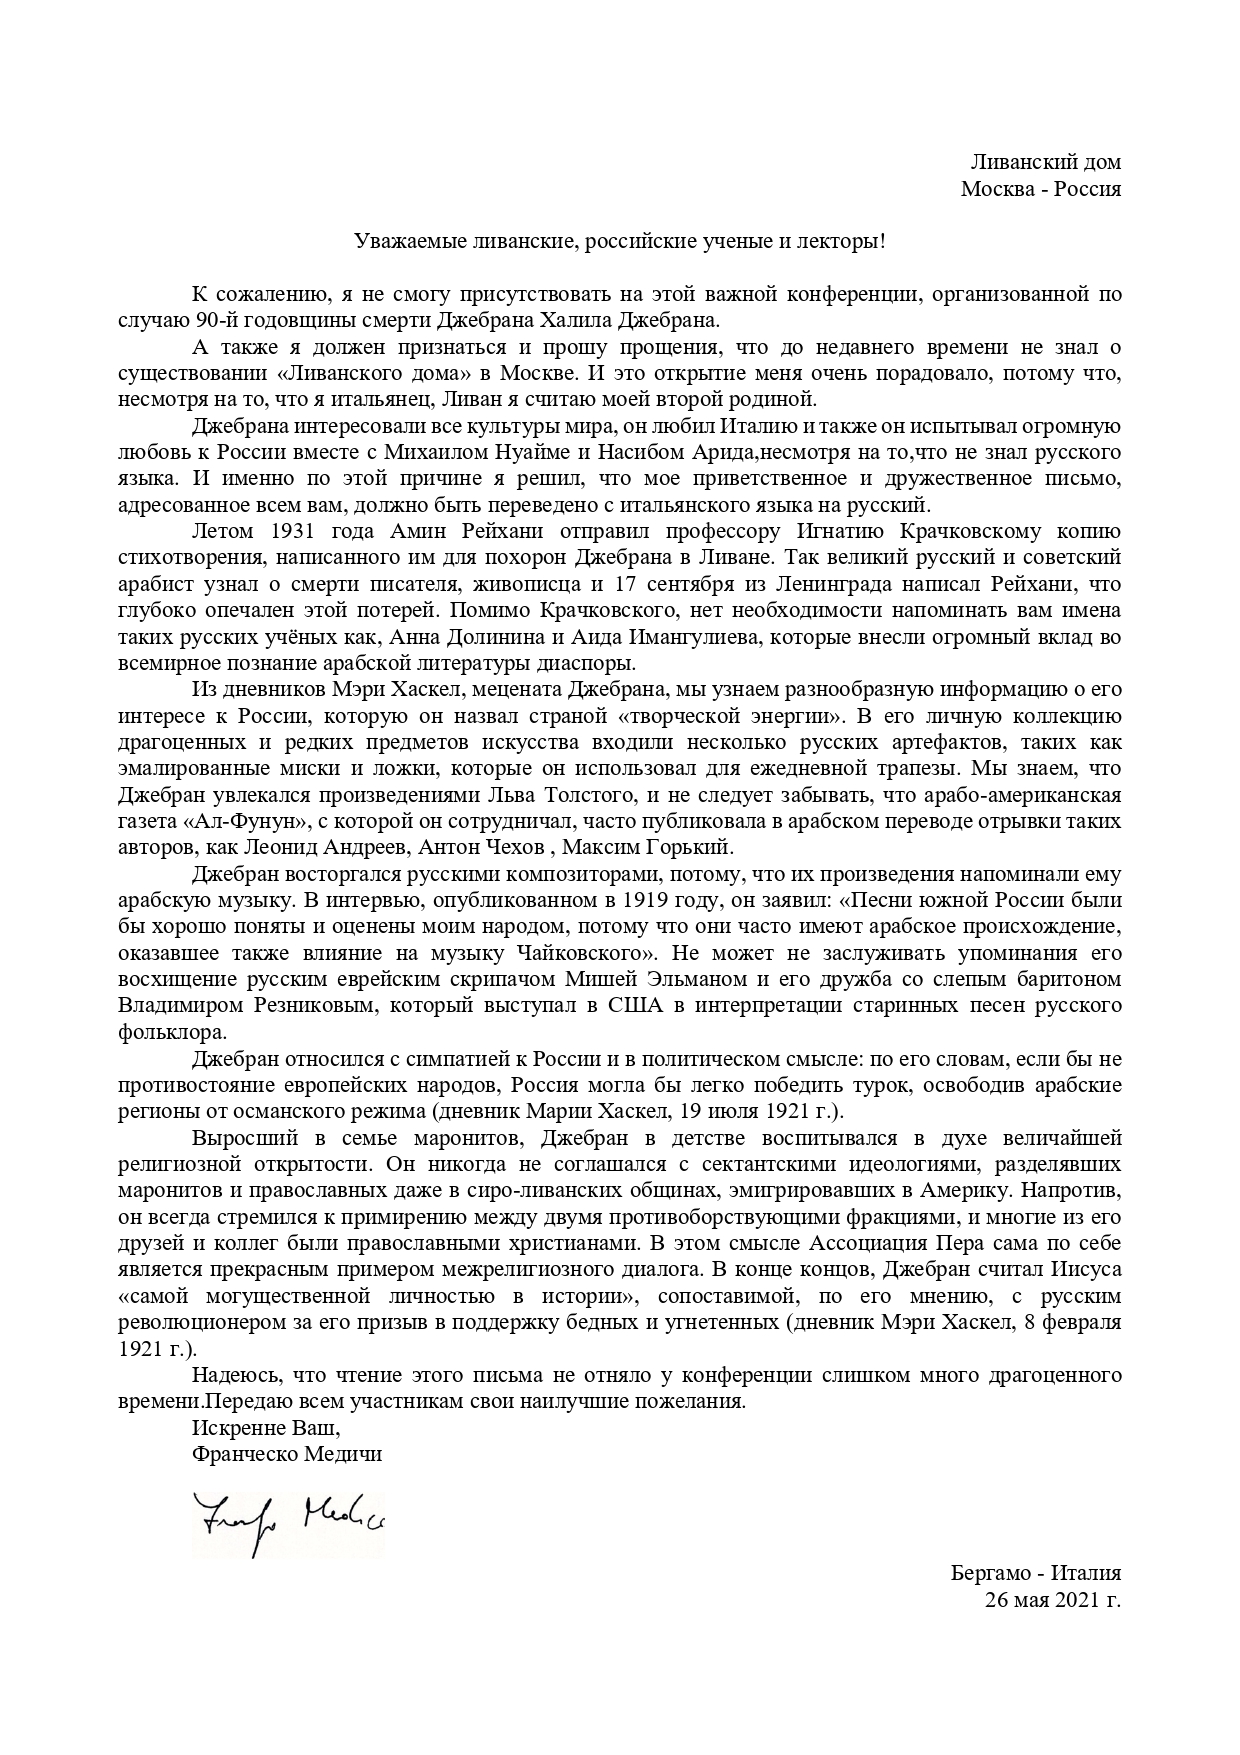 Francesco Medici's original letter in Russian